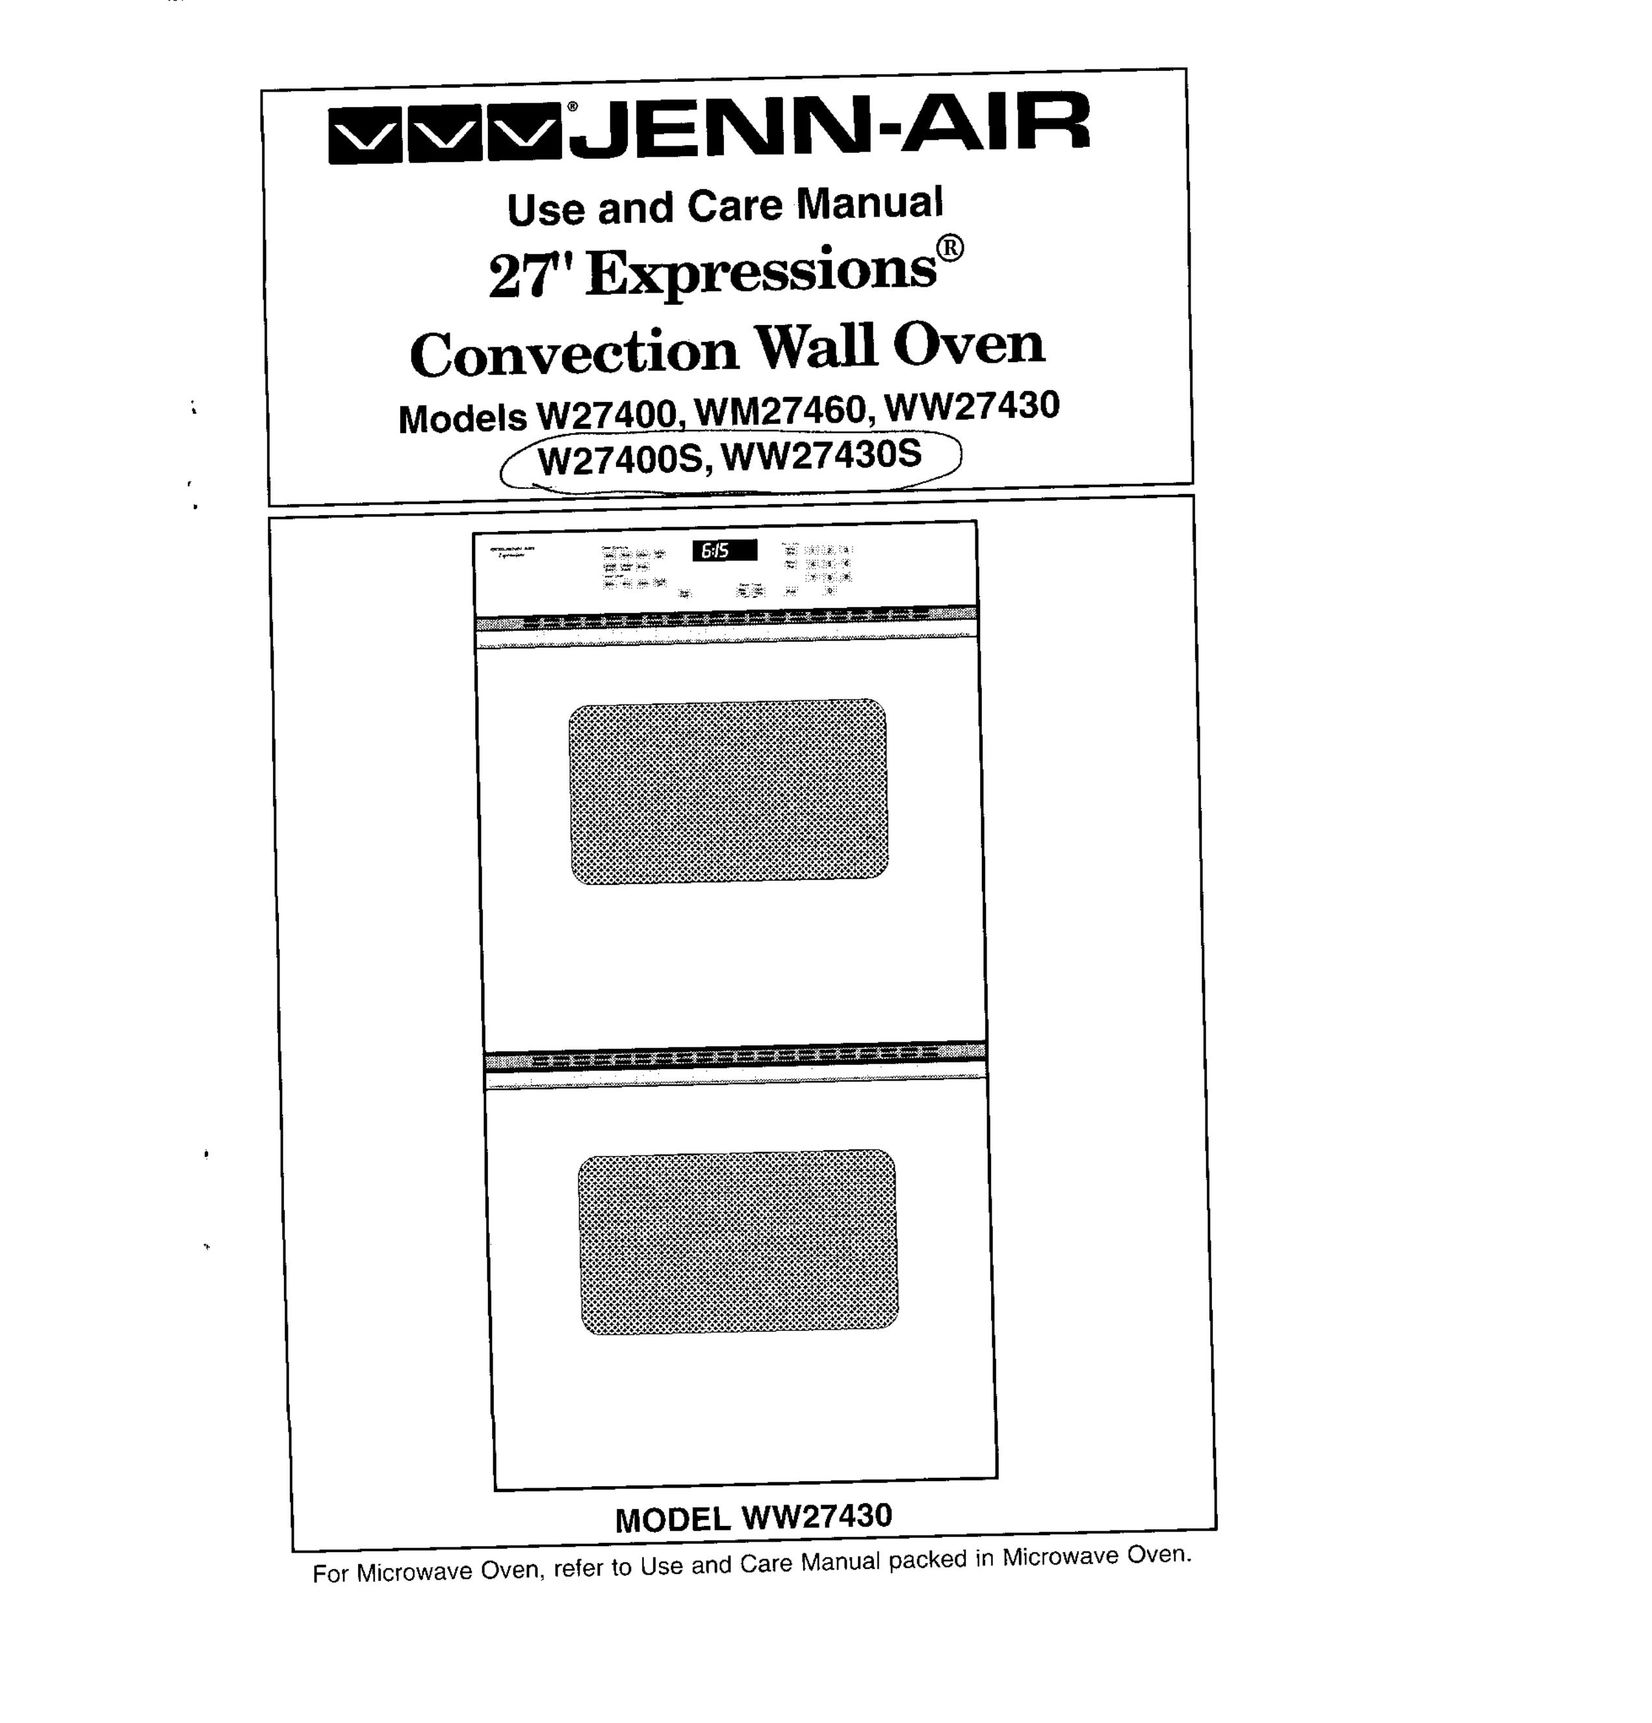 Jenn-Air WM27460 Double Oven User Manual